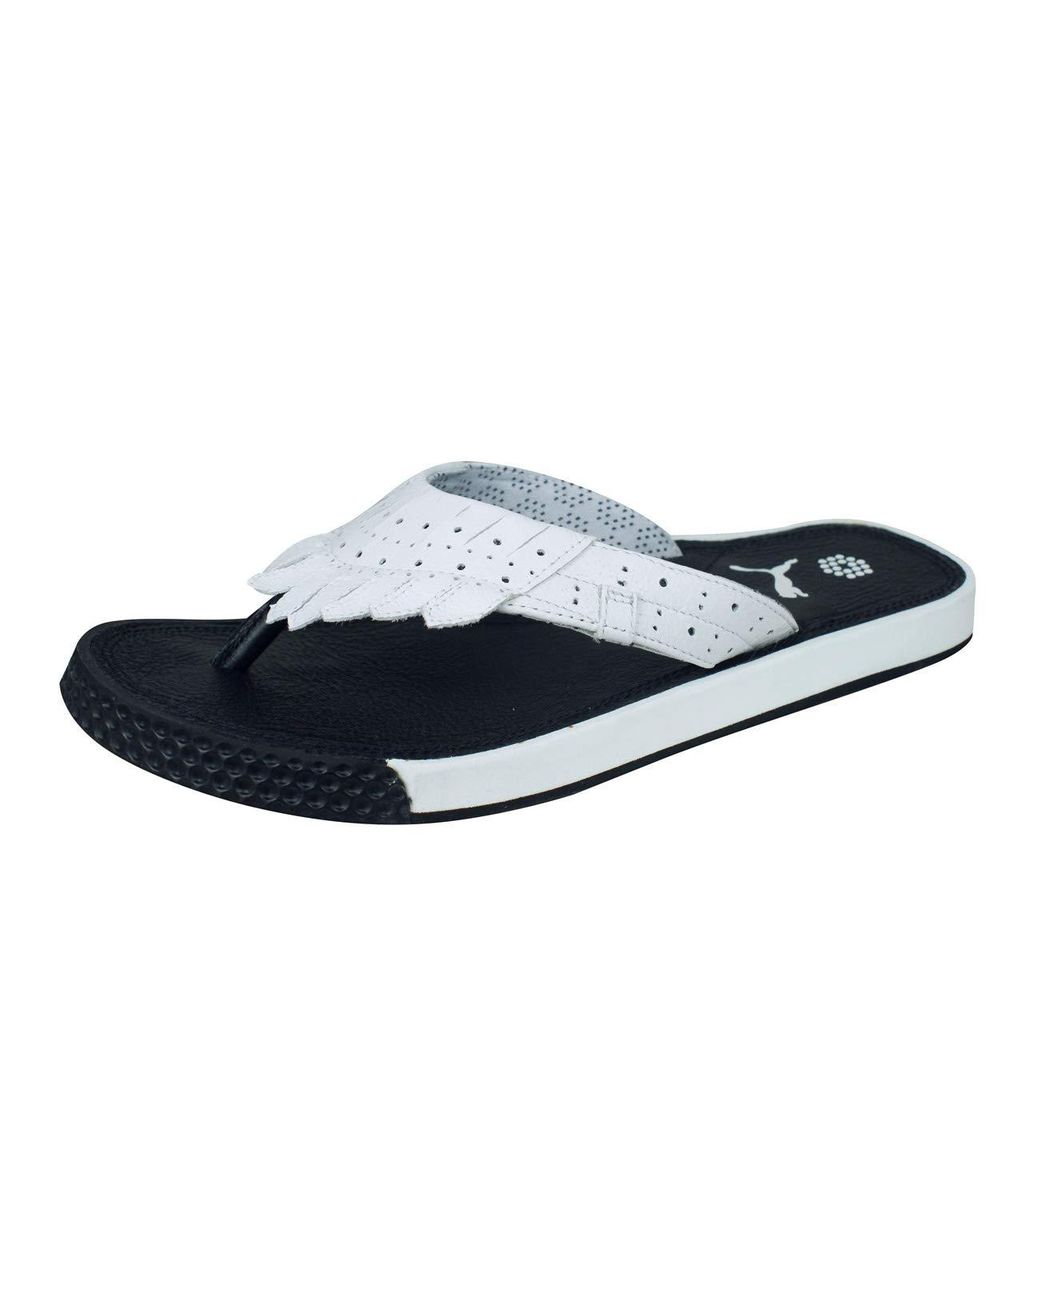 puma flip flops black and white